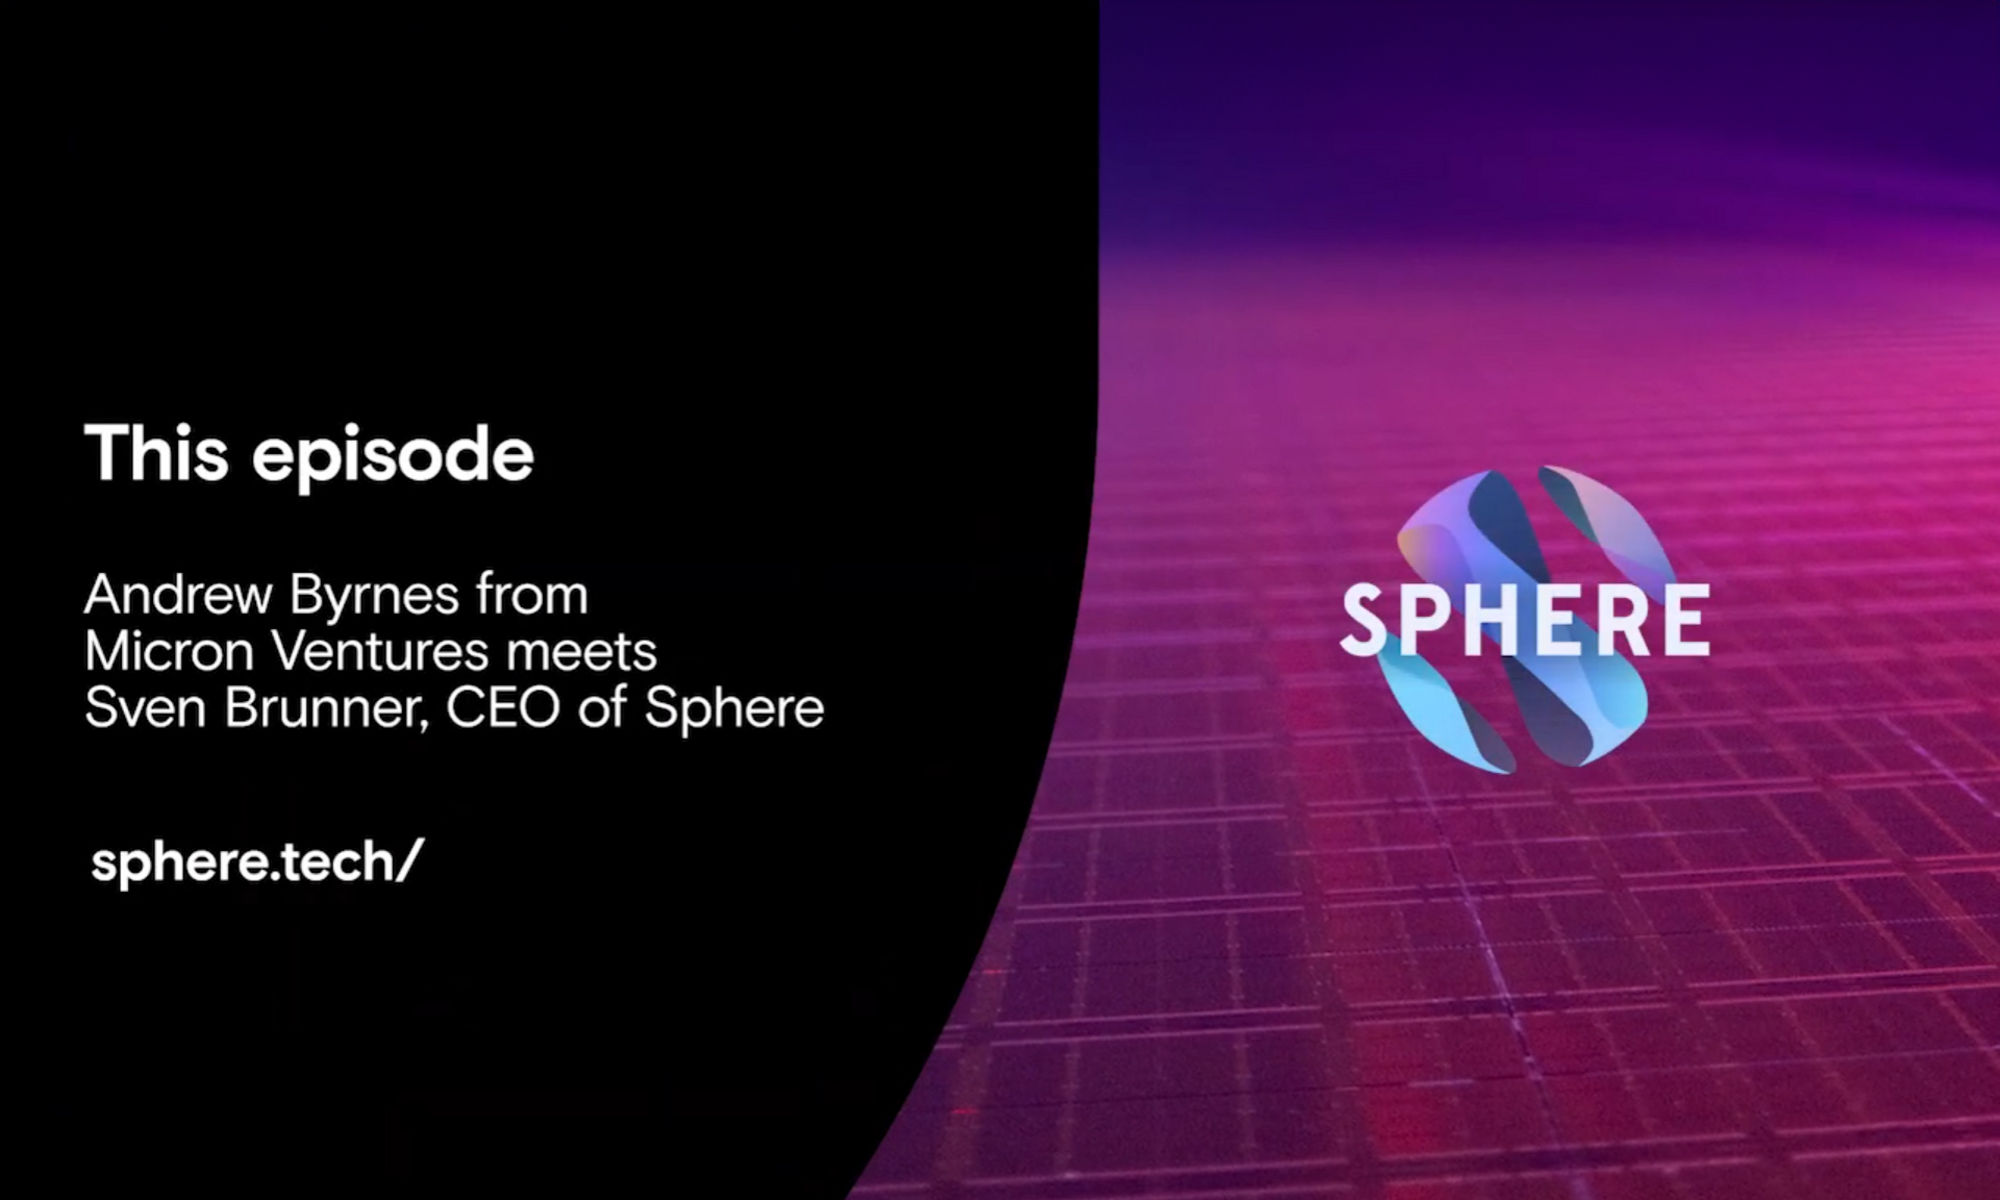 Sphereの創業者を紹介する5分間動画